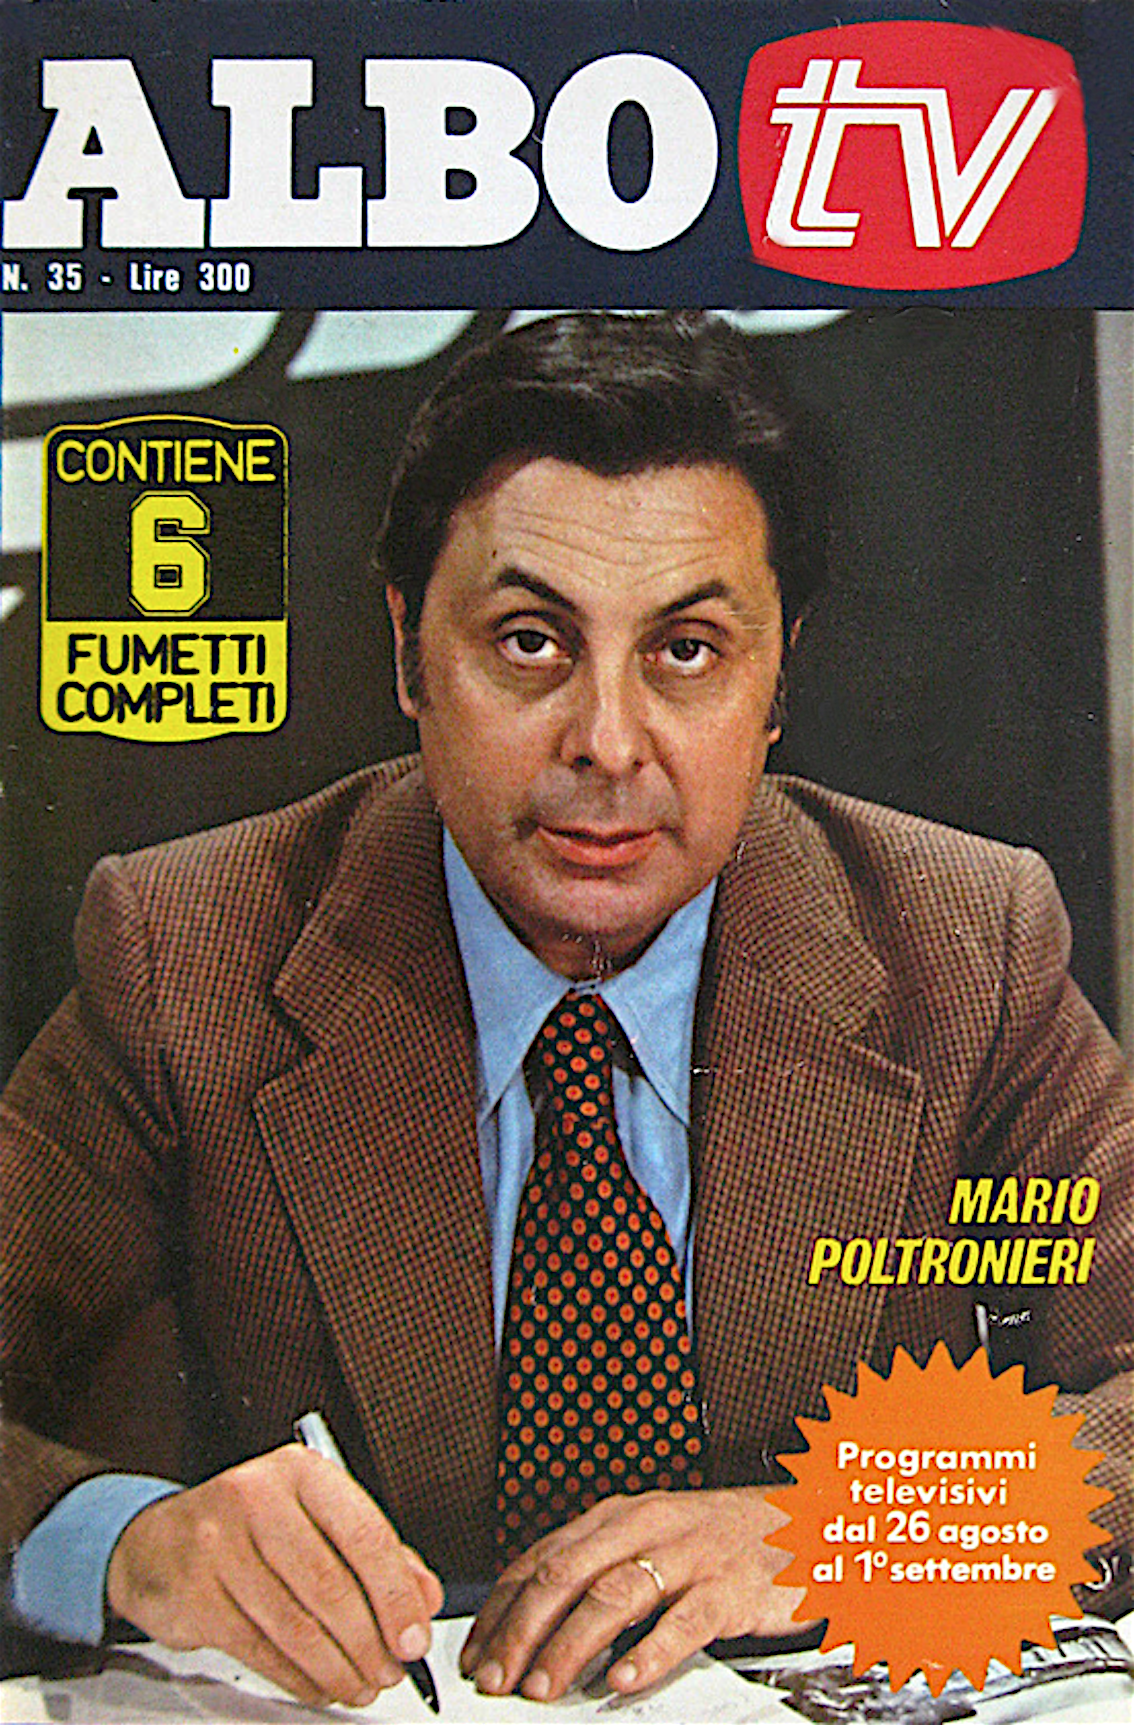 Mario Poltronieri